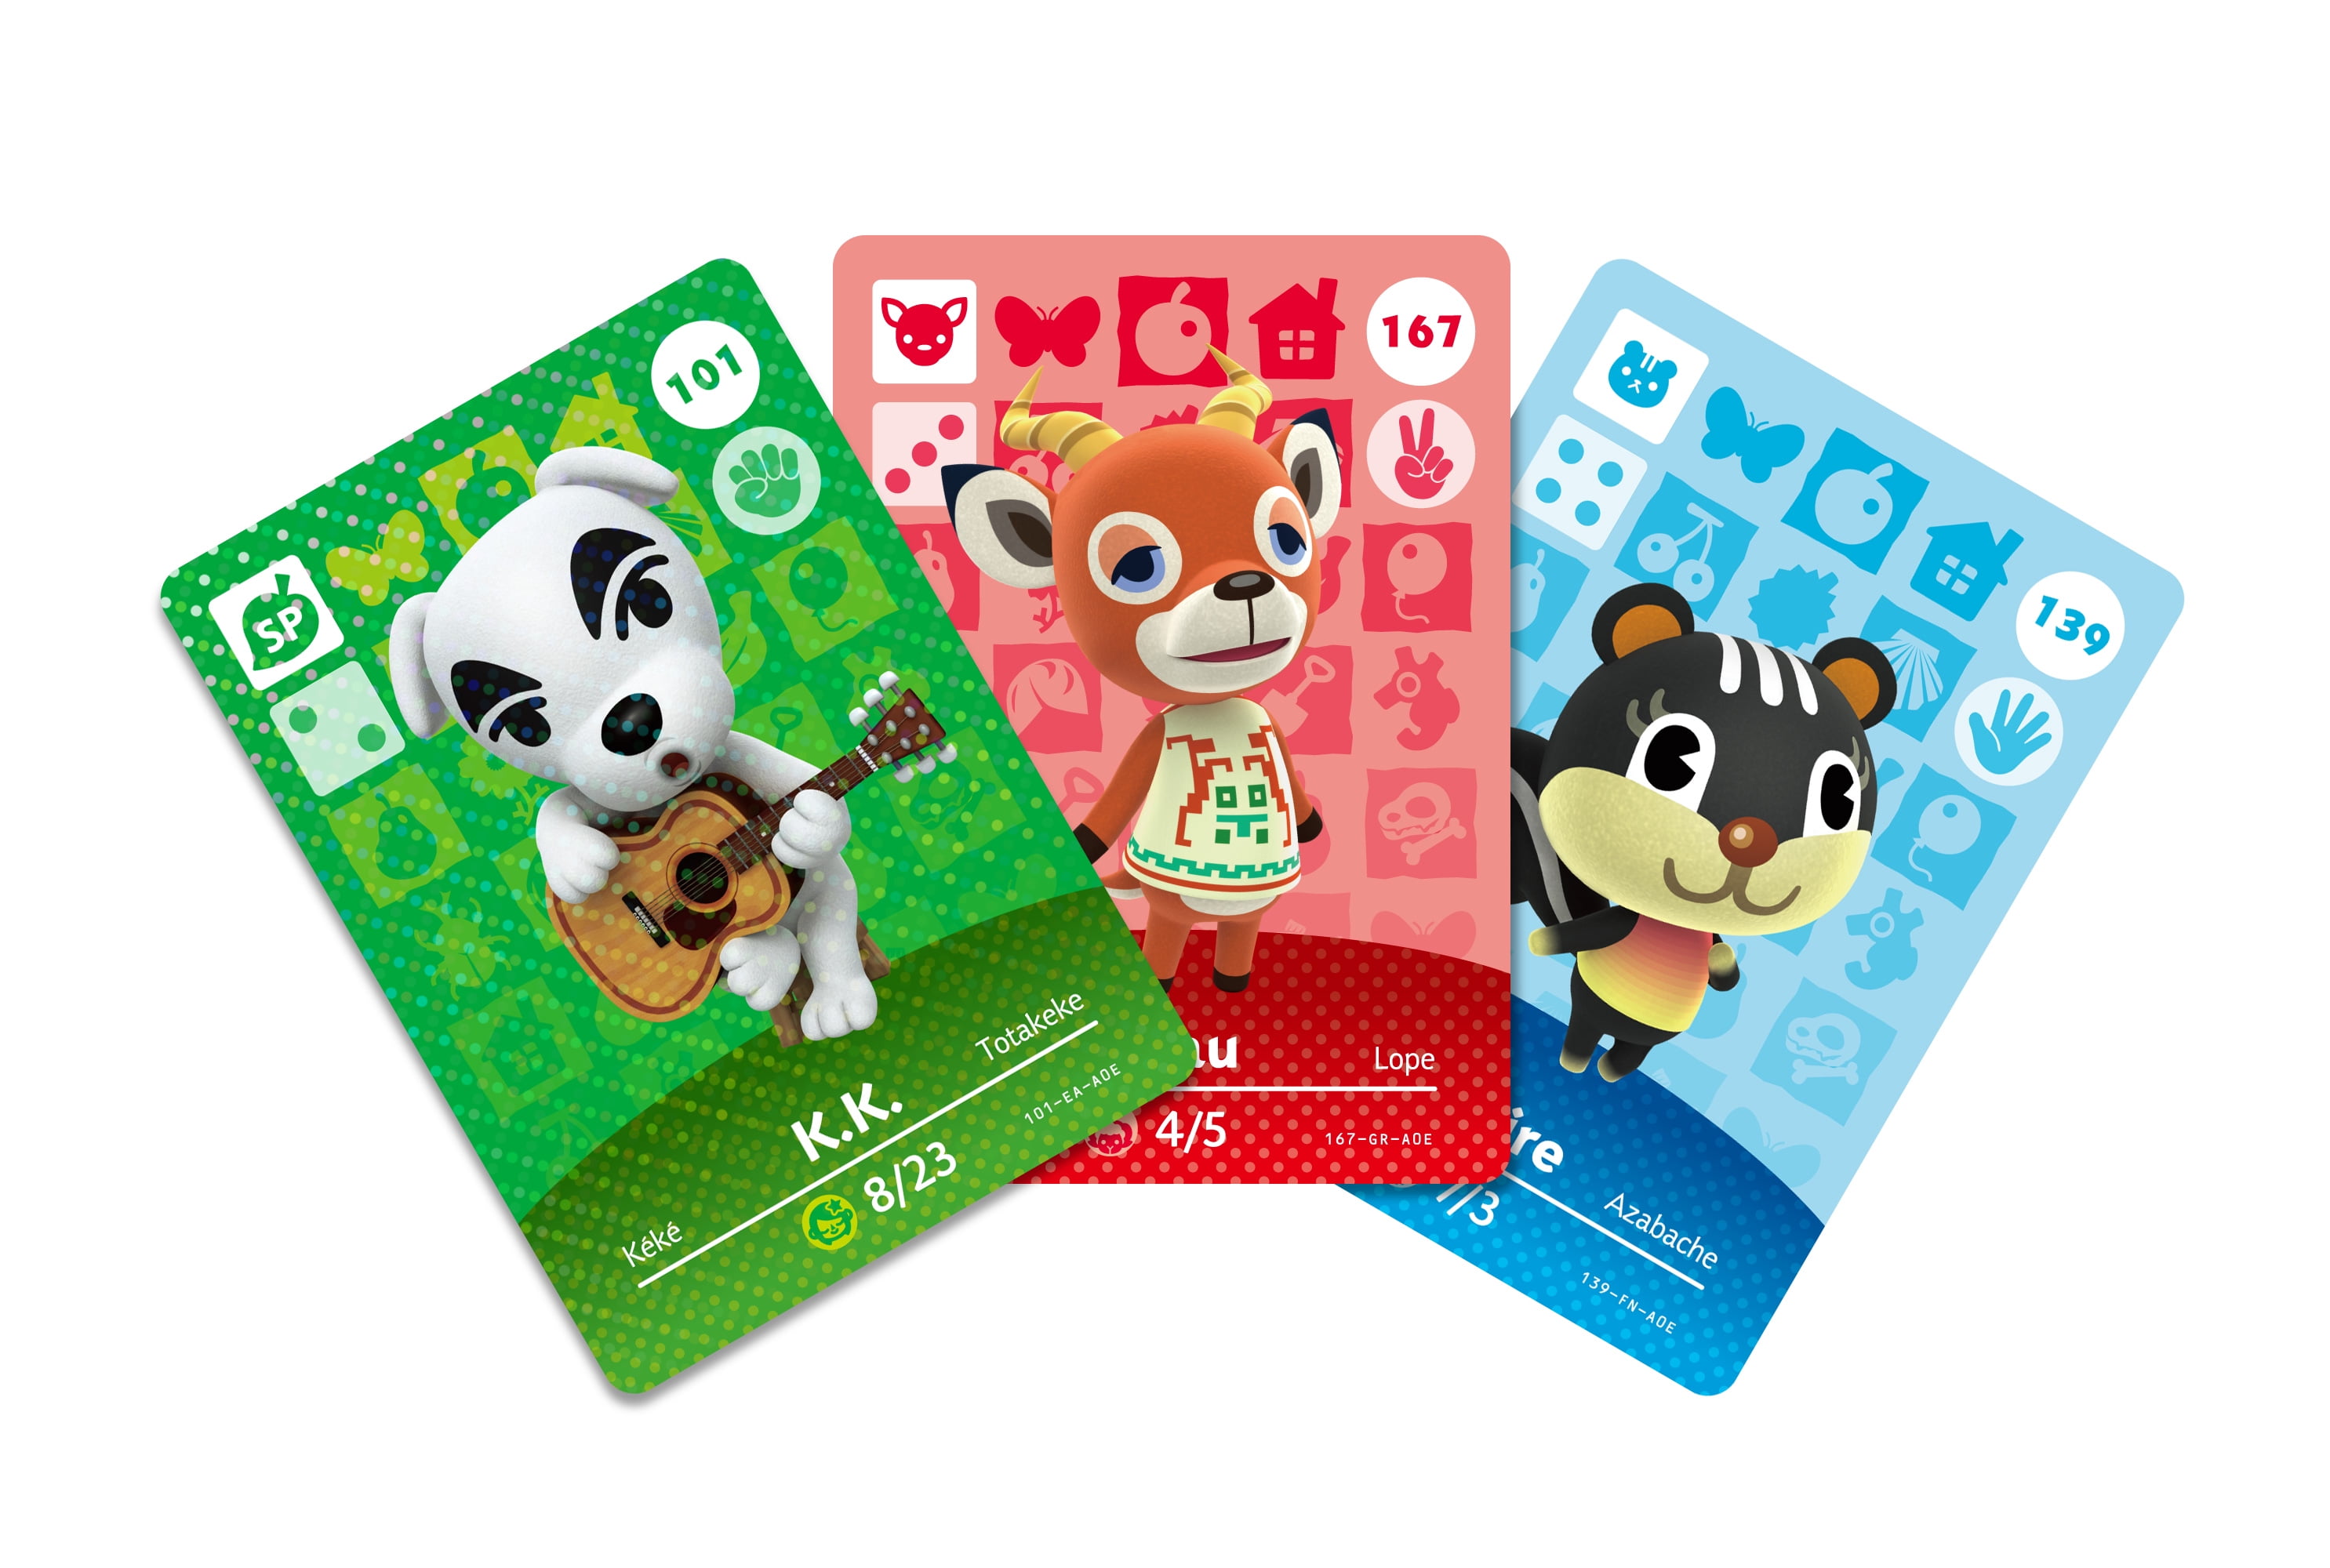 Nintendo Animal Crossing Amiibo Cards Series 1-4 Bundle [24 Cards Total]